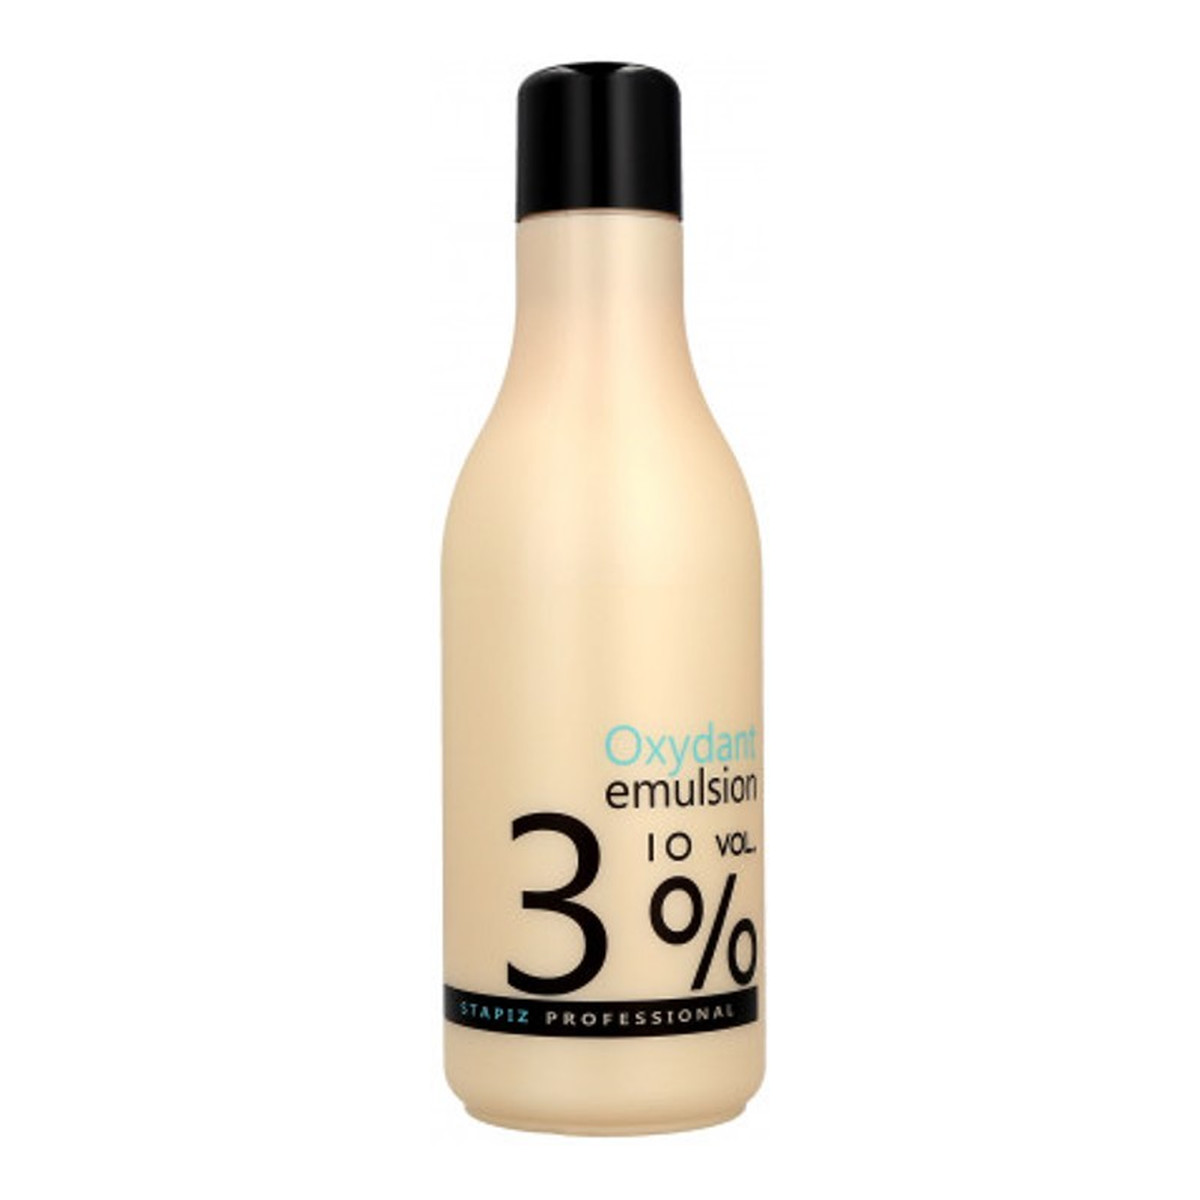 Stapiz Basic Salon Oxydant Emulsion Woda utleniona w kremie 3% 150ml